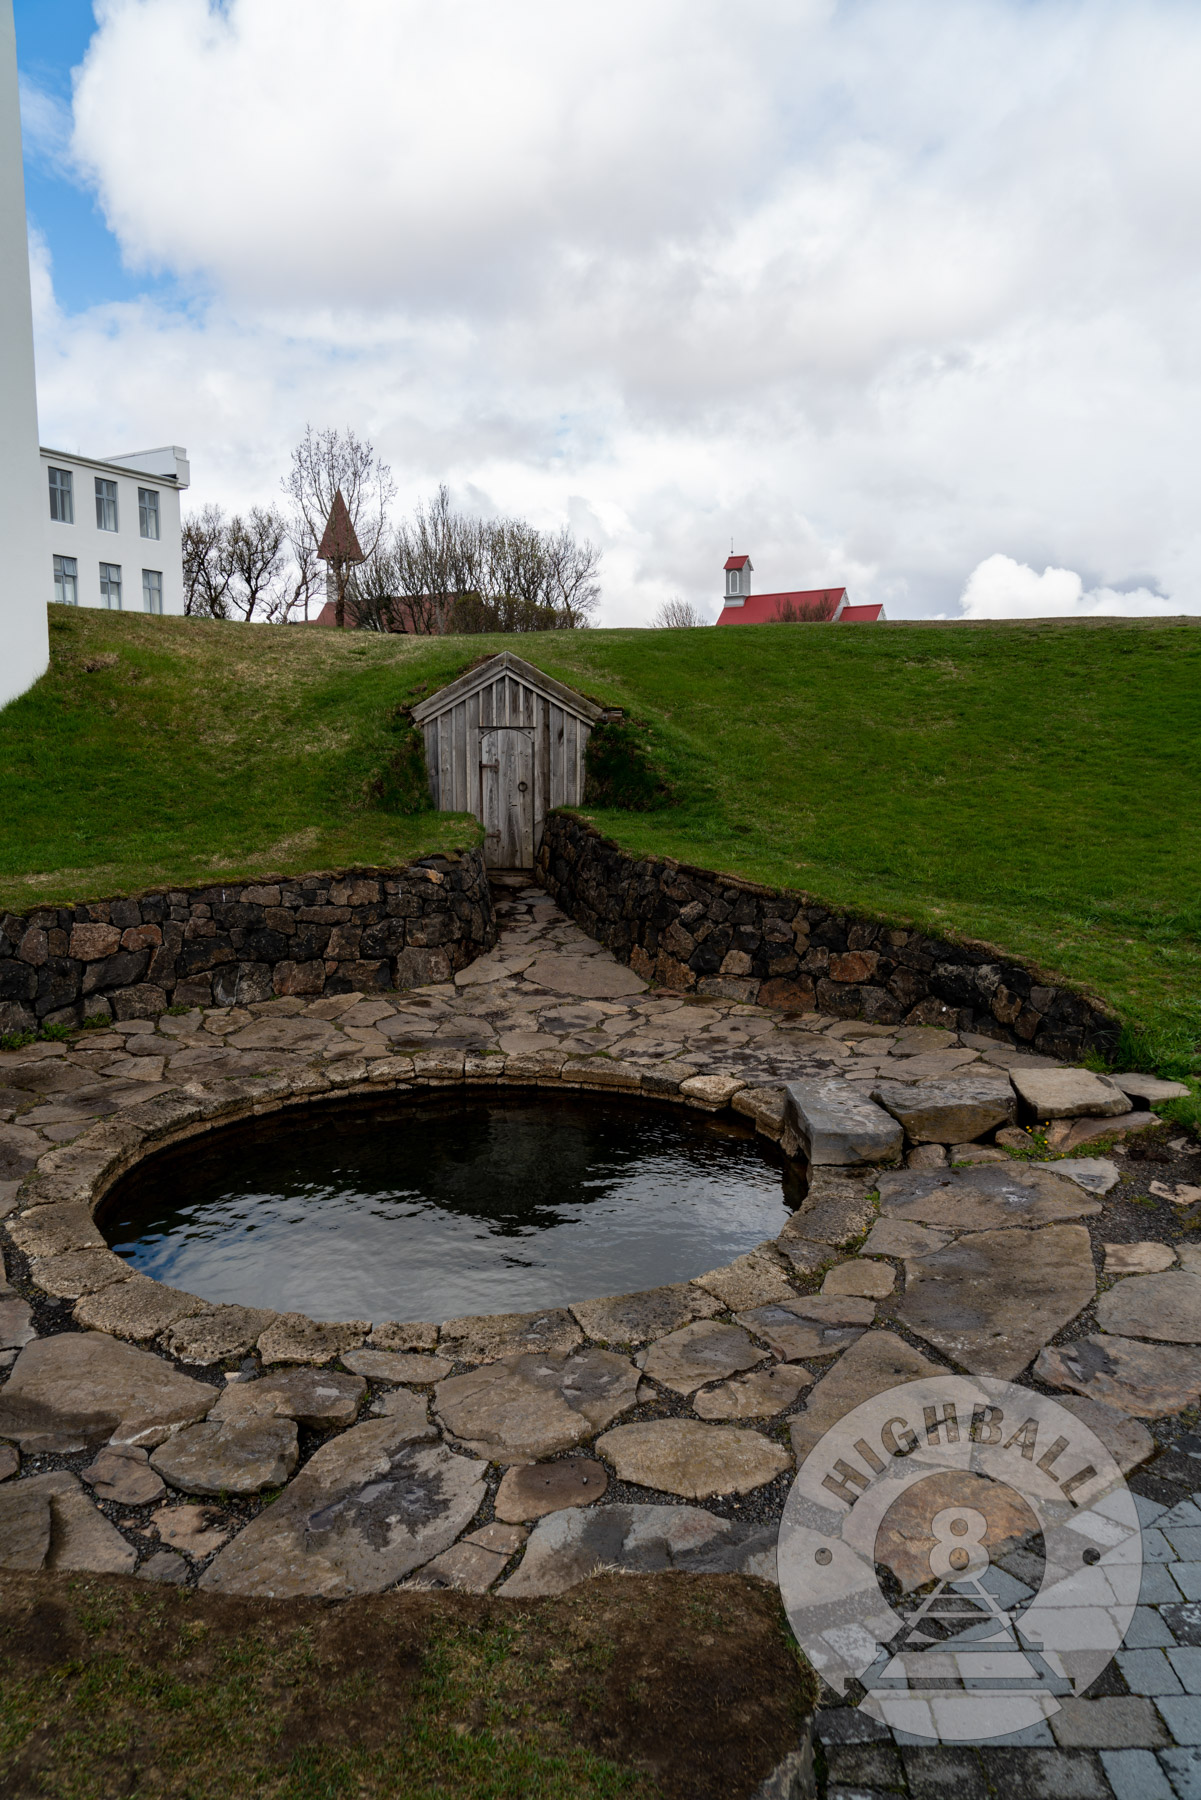 The Snorralaug, the hot springs of Icelandic historical figure Snorri Sturluson, Reykholt, Iceland, 2018.